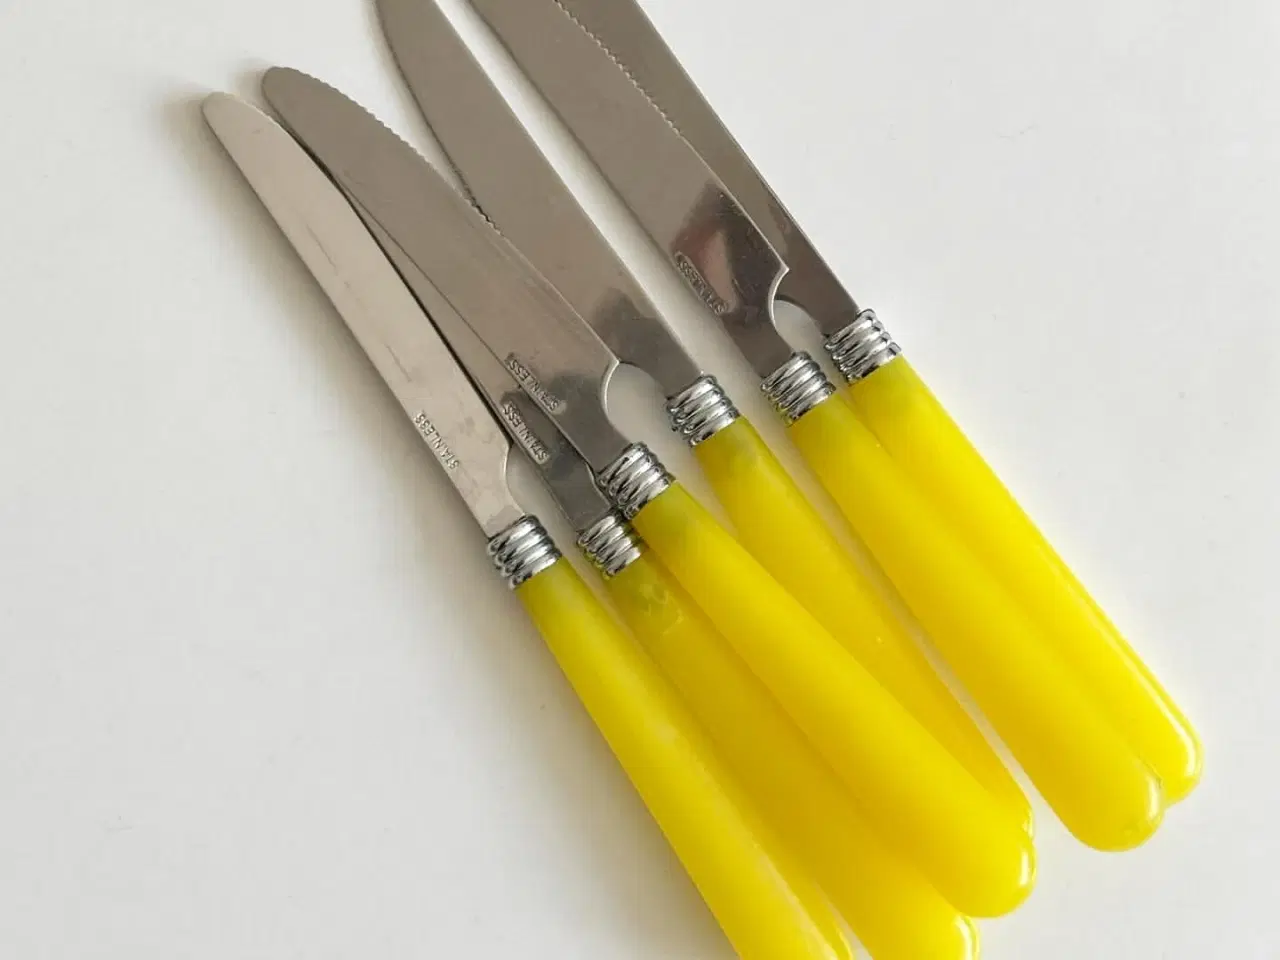 Billede 2 - Retro knive, stål og gul plast, 6 stk samlet